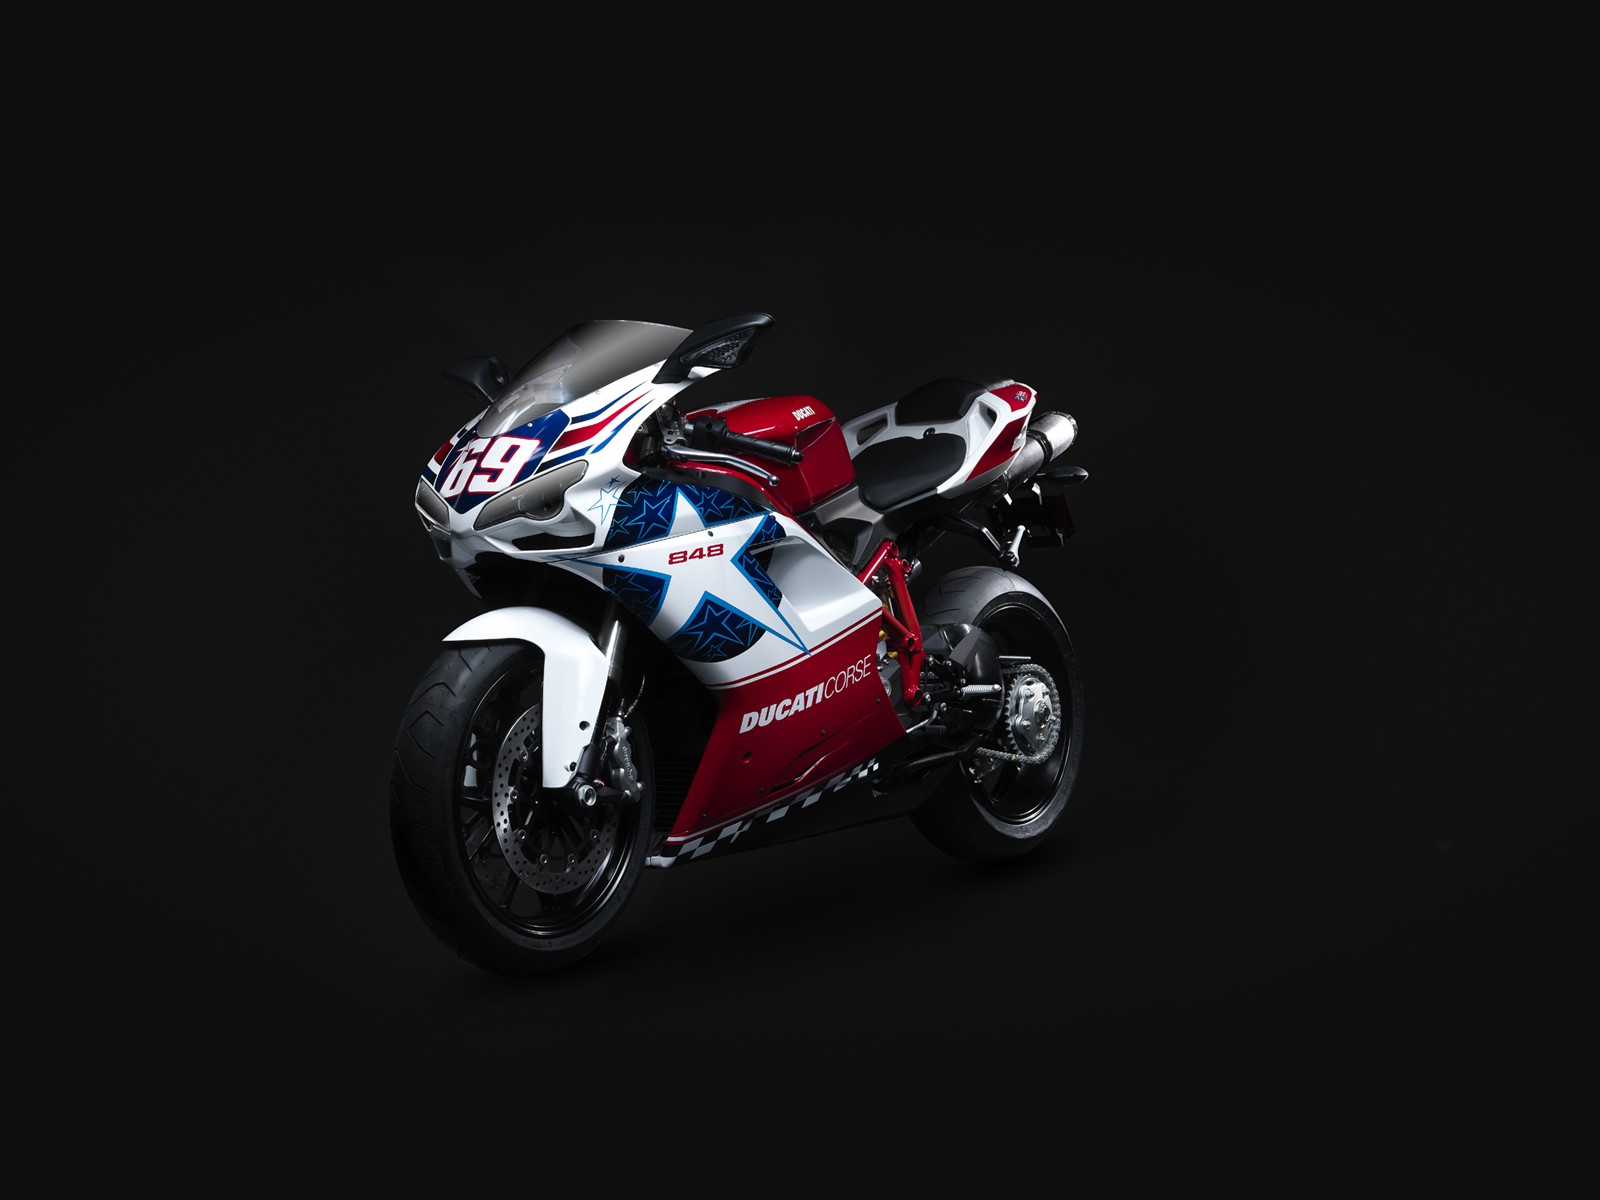 Ducati Bikes Wallpaper | Free HD Desktop Wallpapers - Widescreen ...